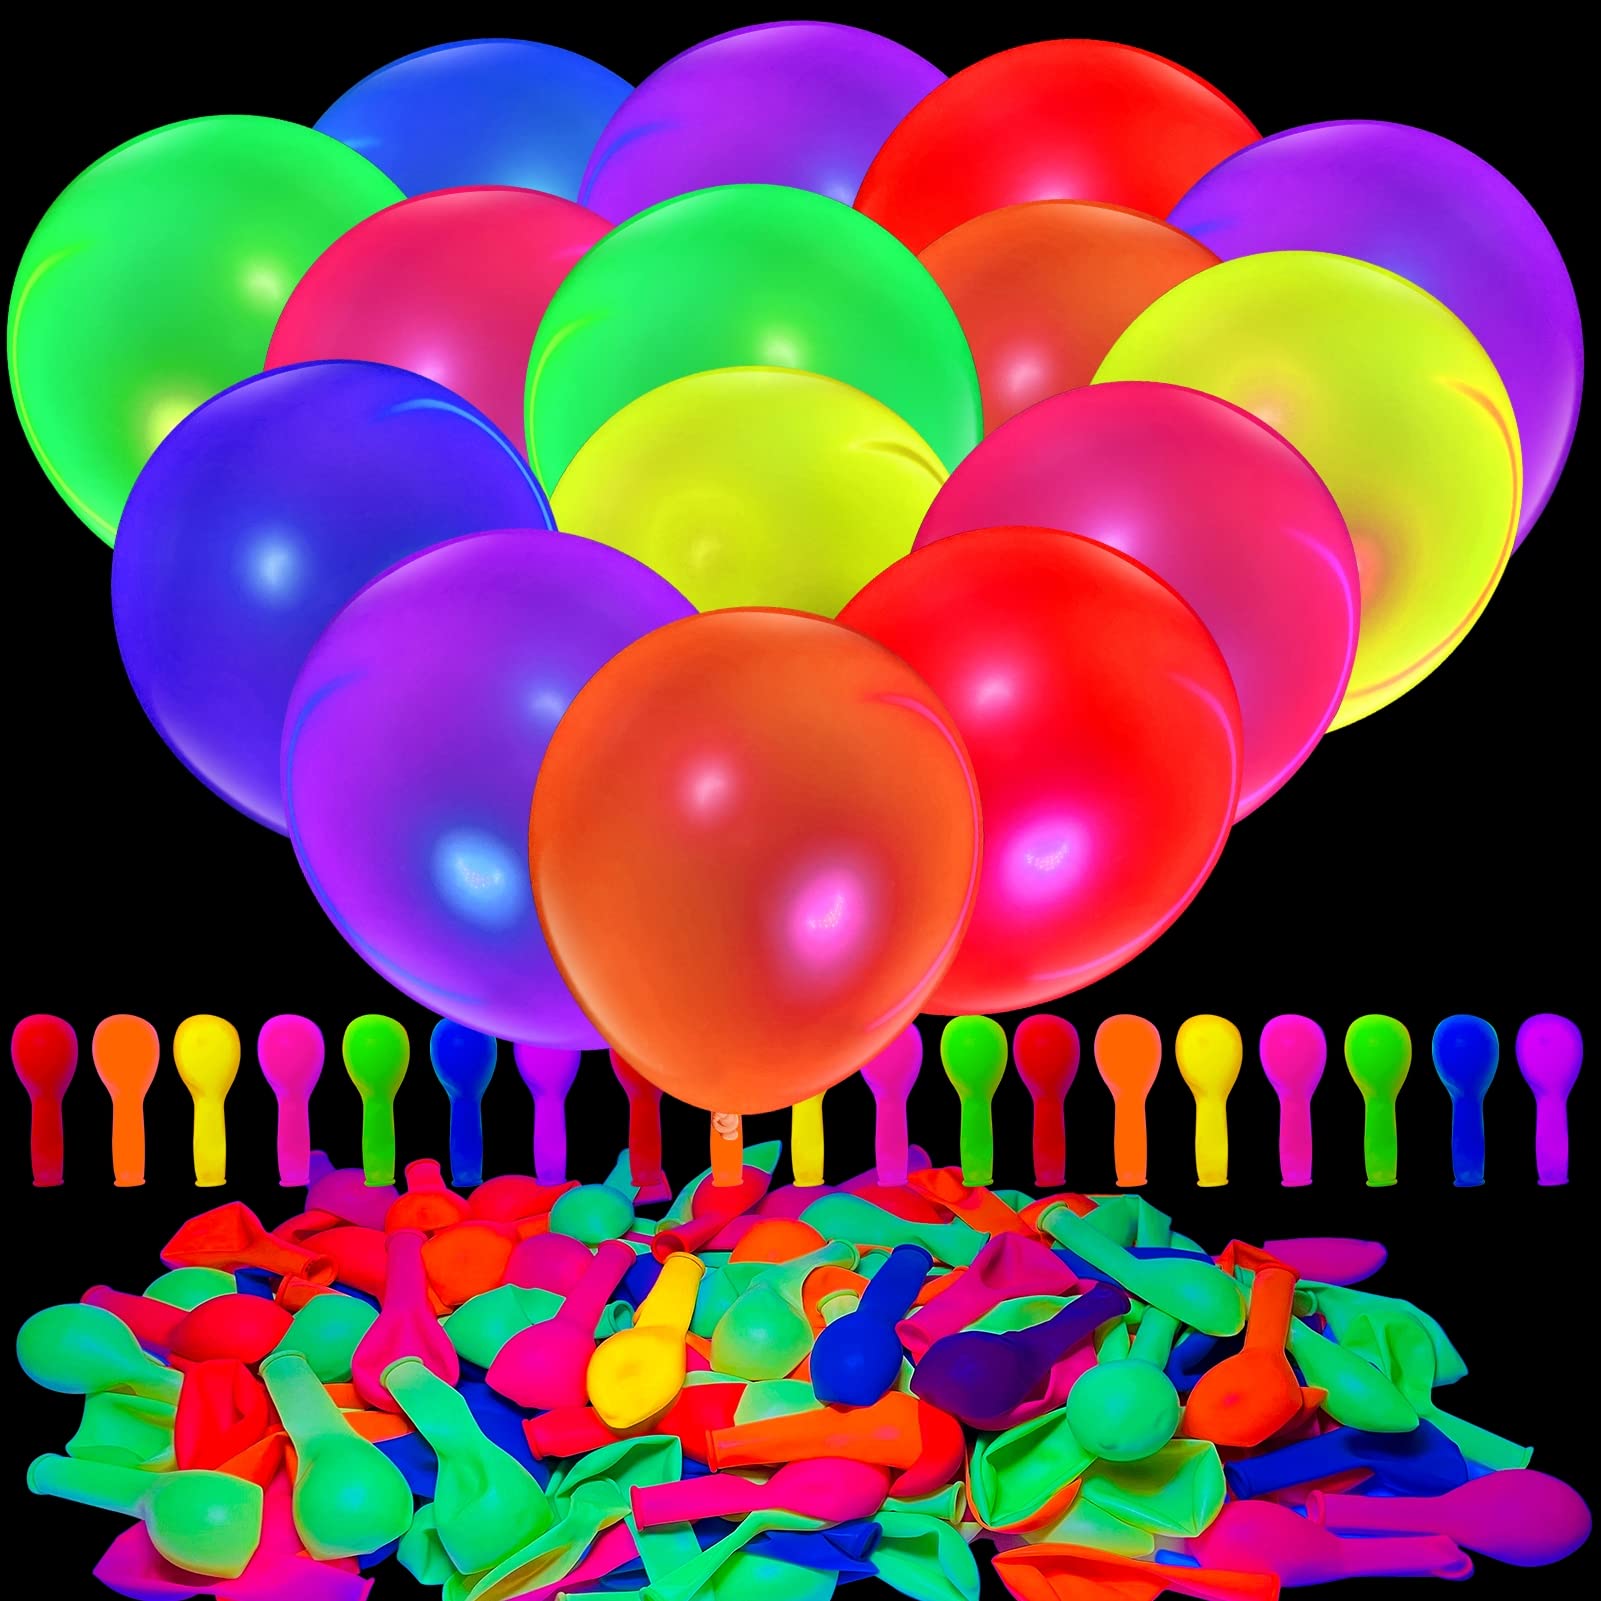 Balloon Accessories - Hi Float/Balloon Glow/Balloon Shine - Hi